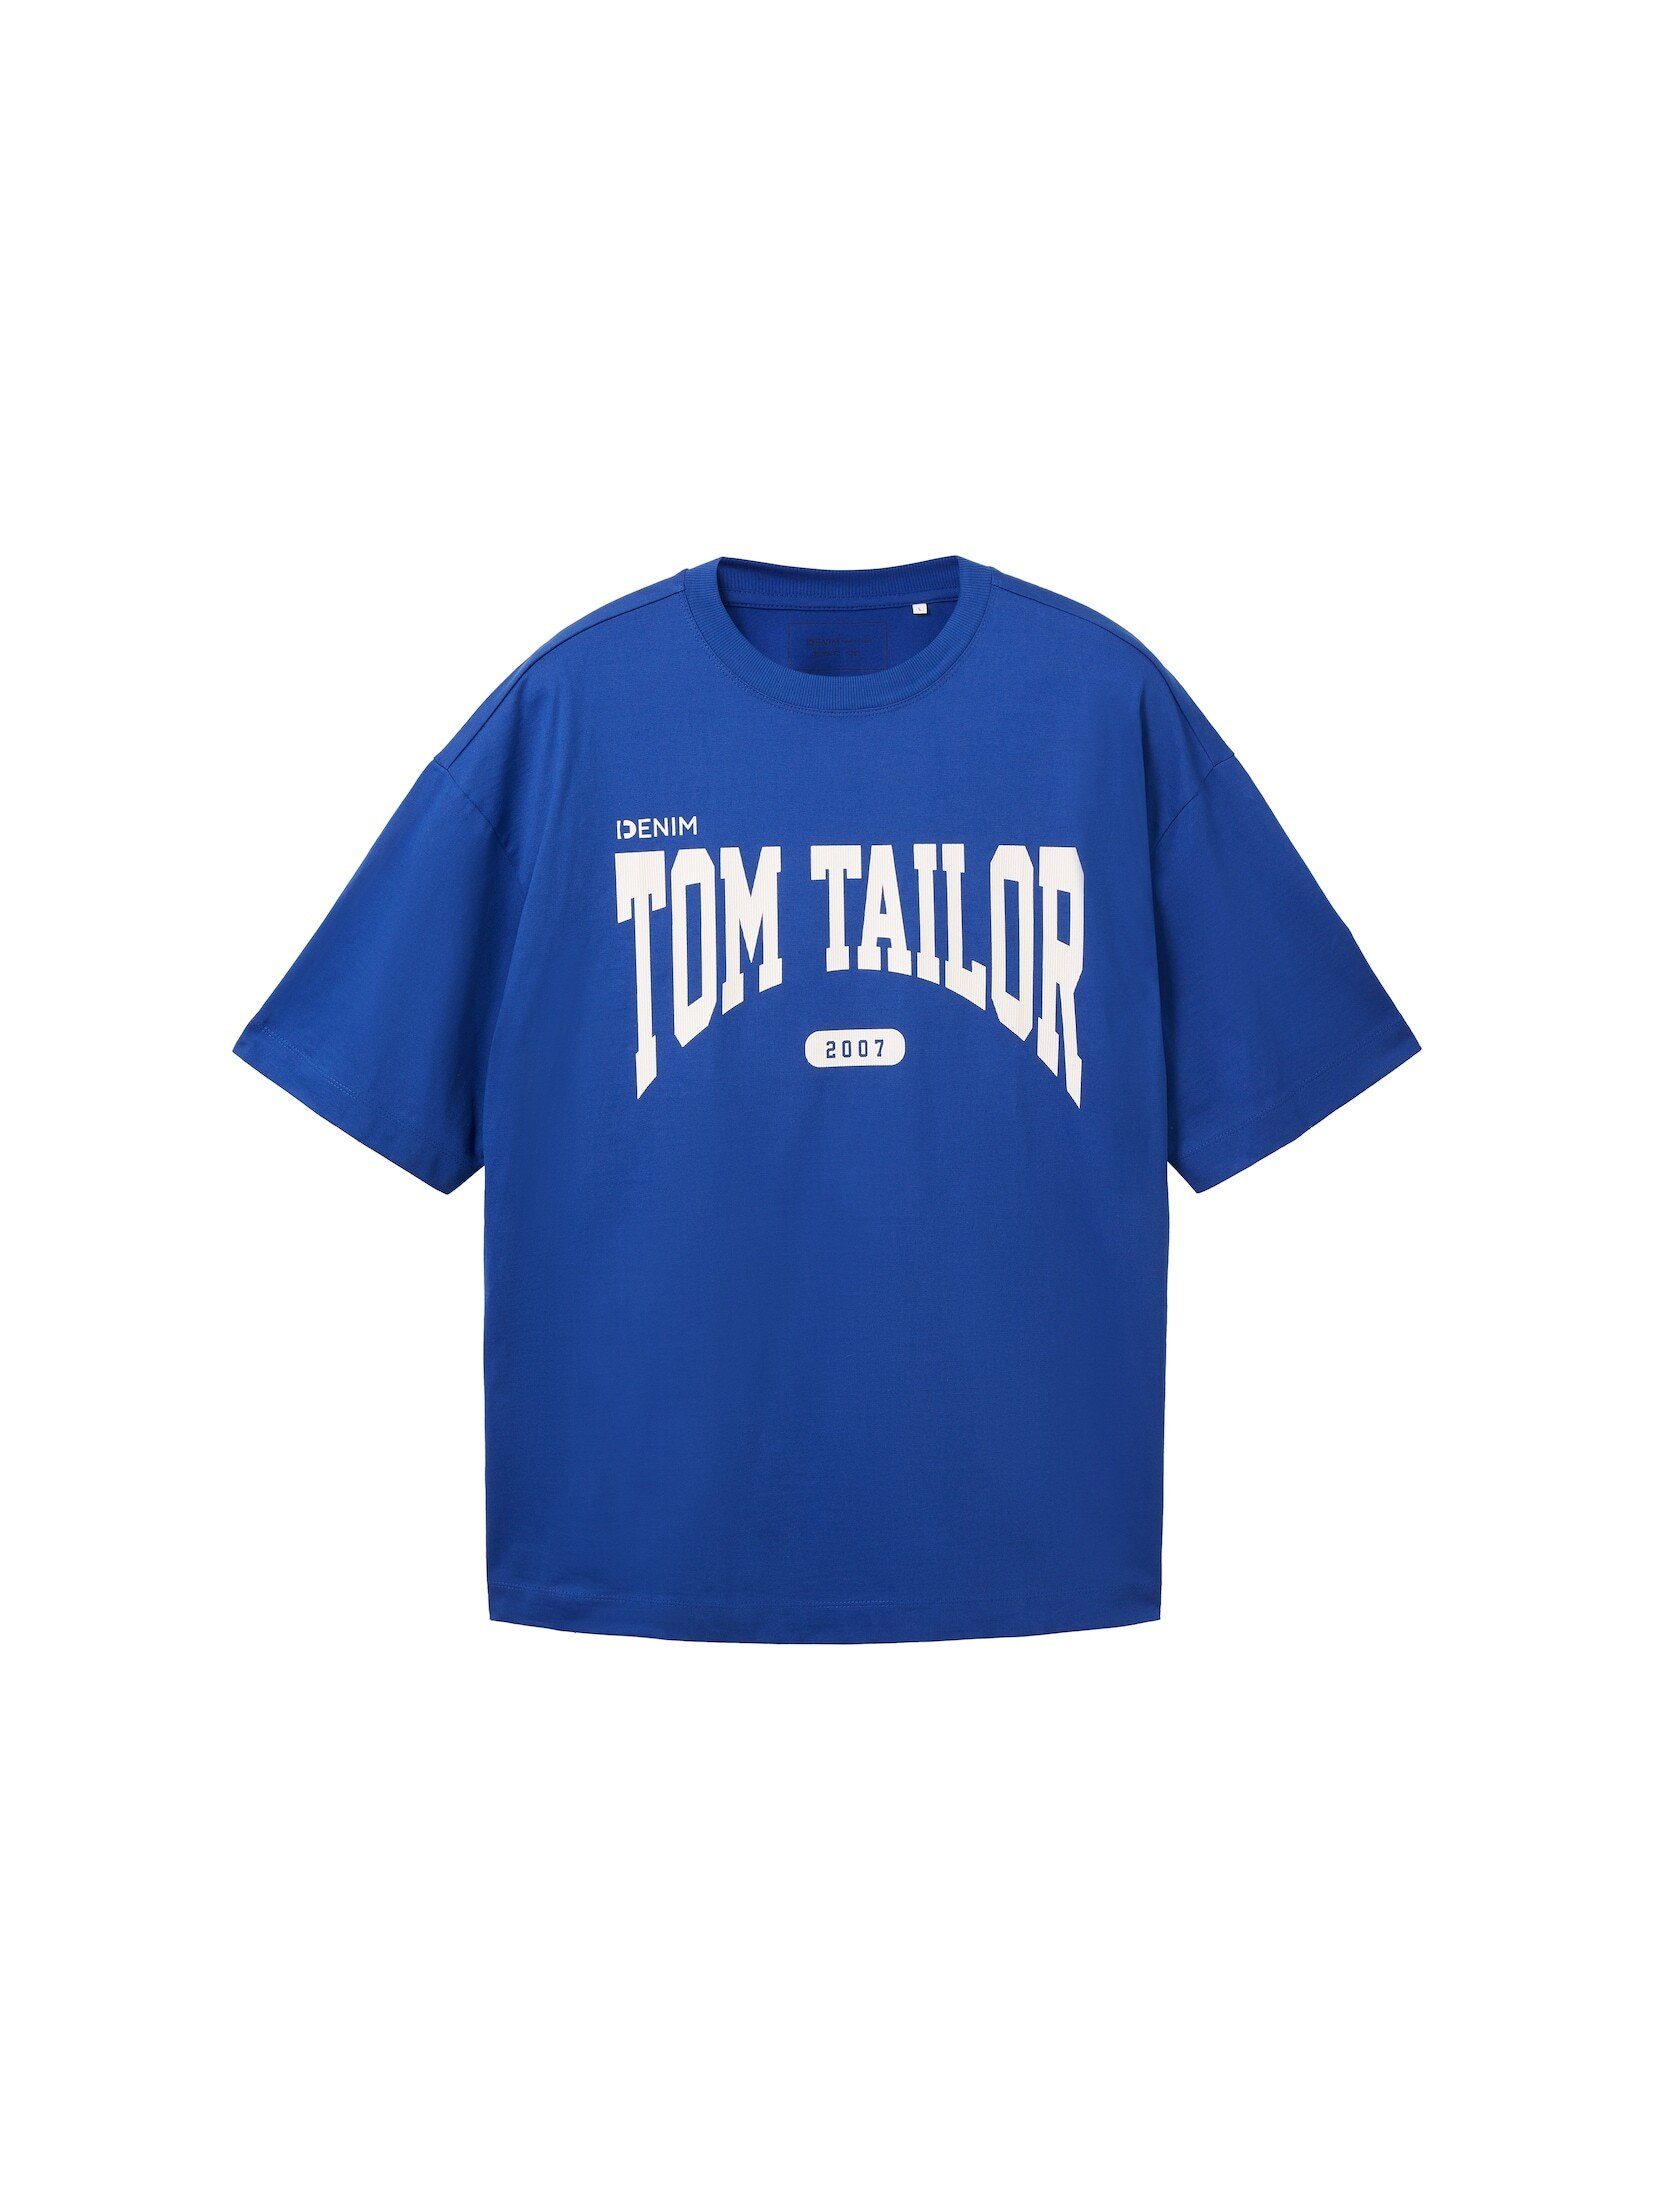 TOM Print mit shiny blue T-Shirt TAILOR royal Oversized Denim T-Shirt